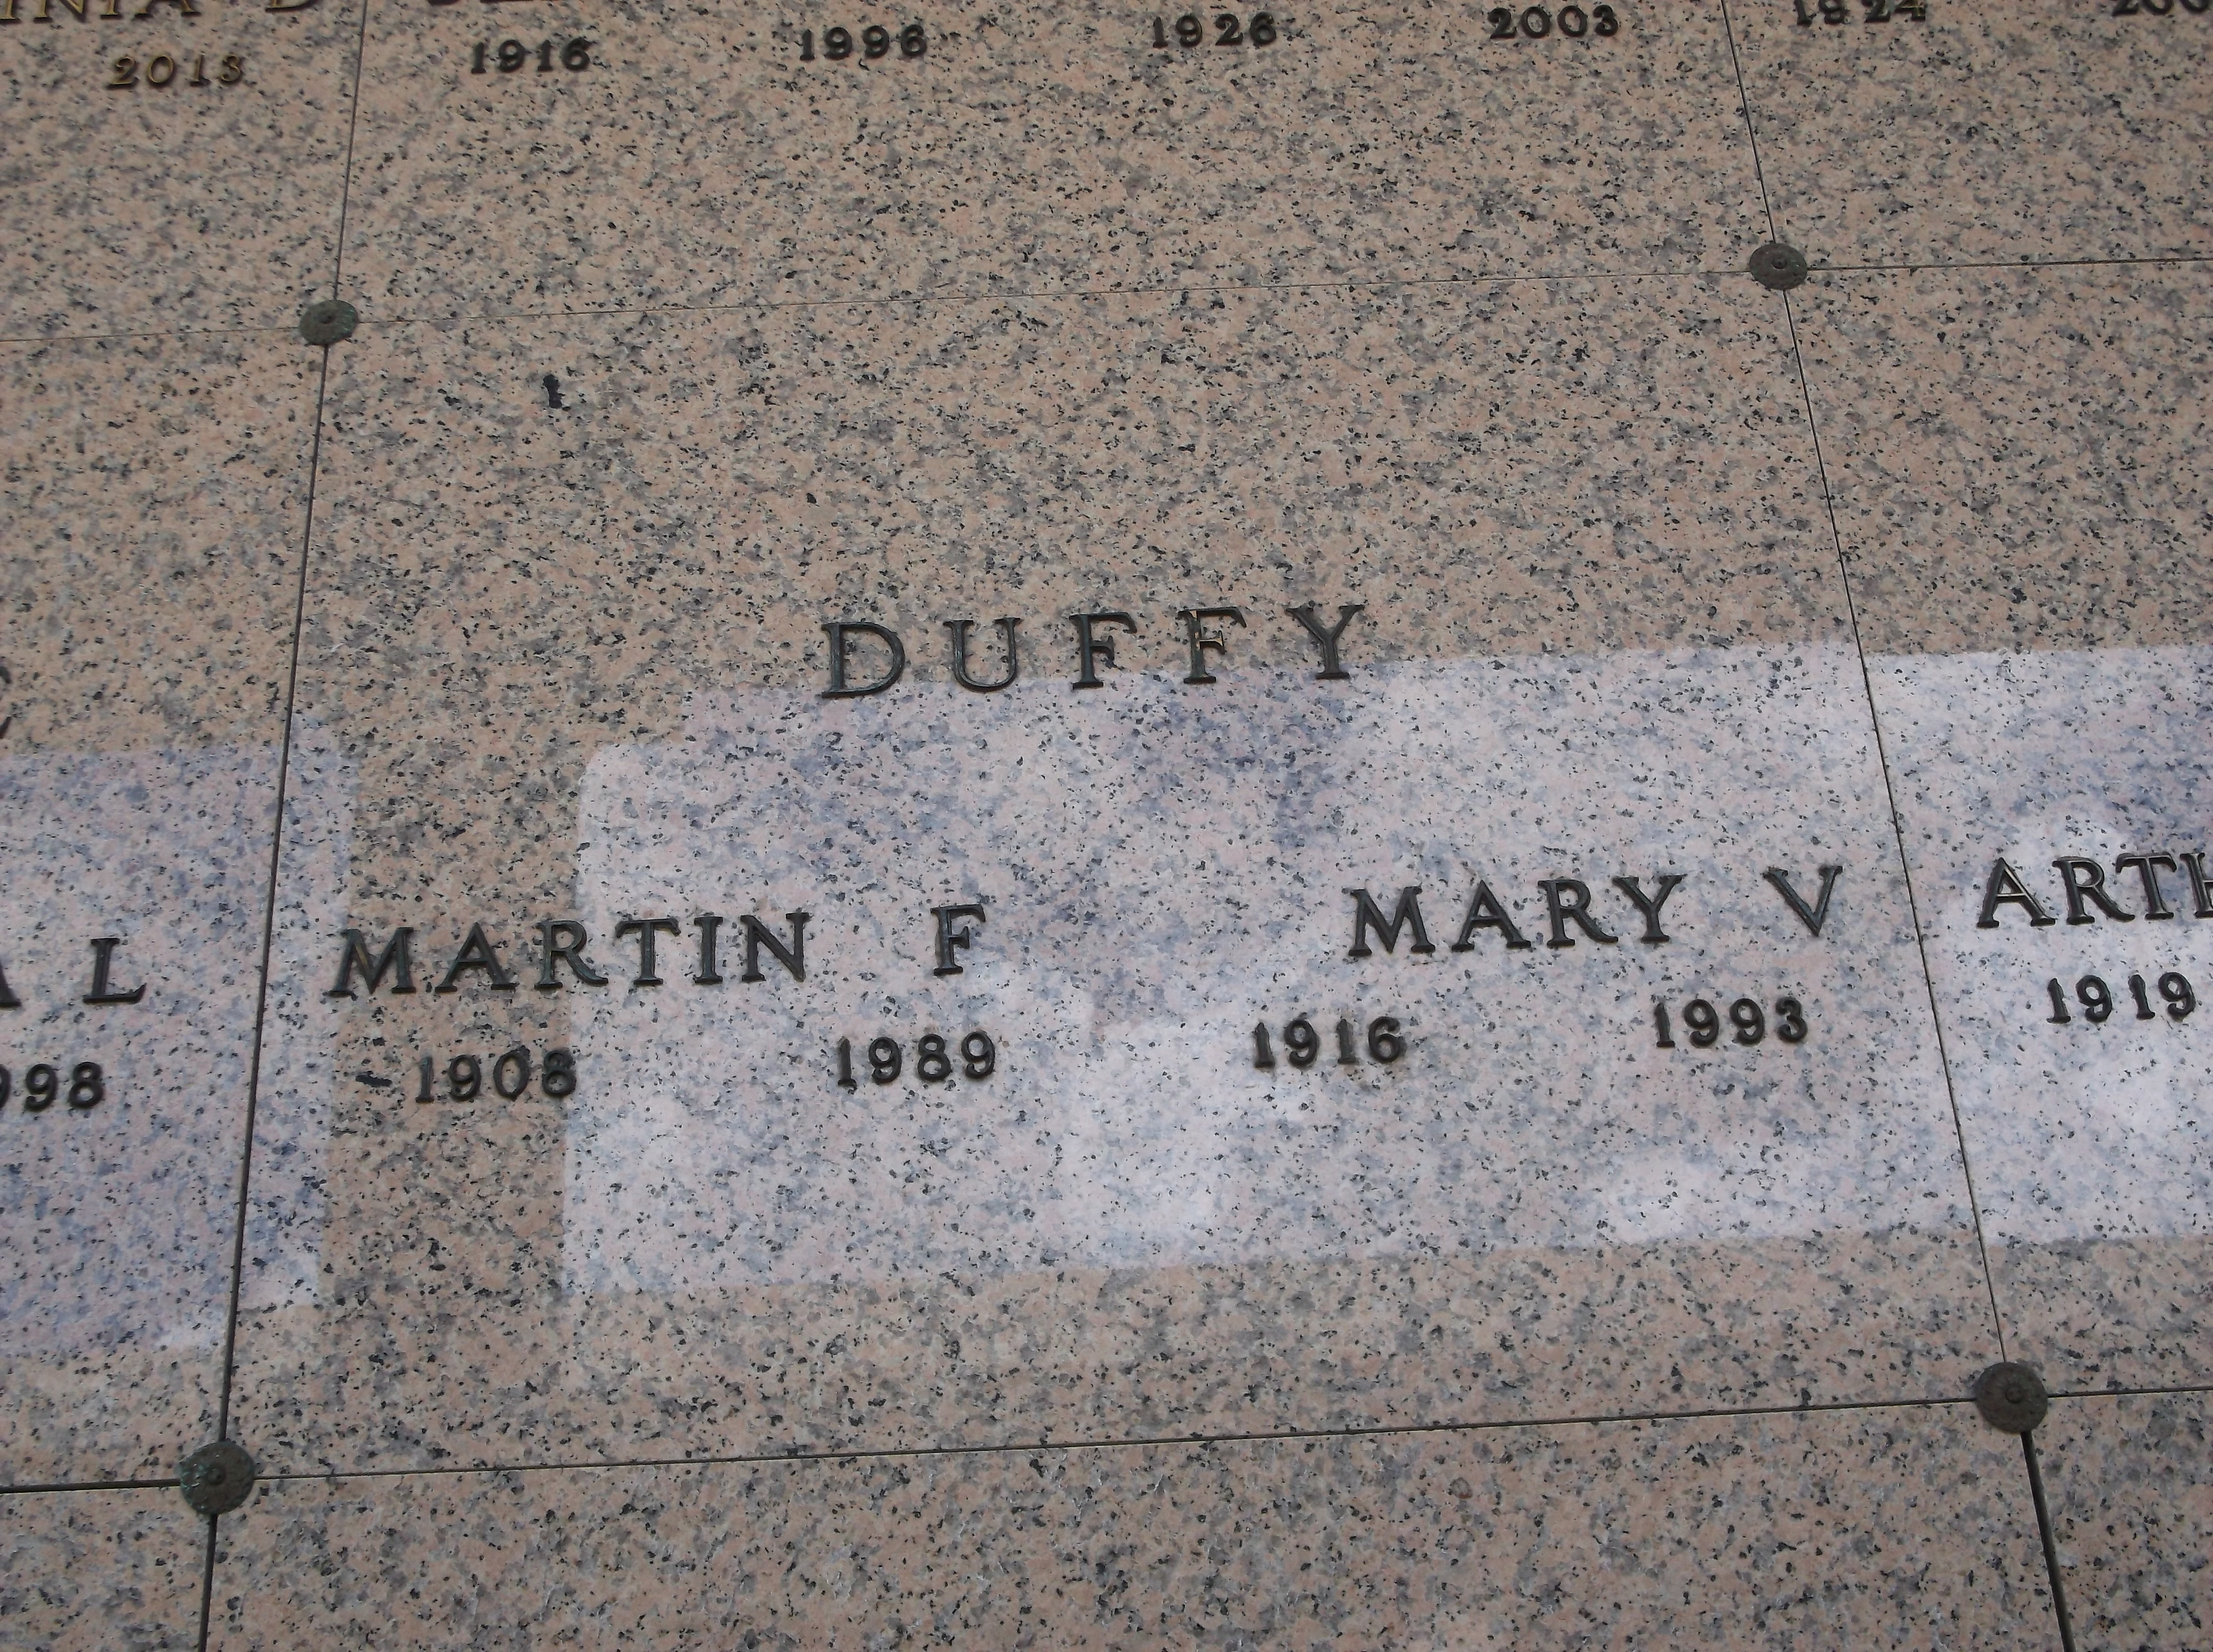 Martin F Duffy